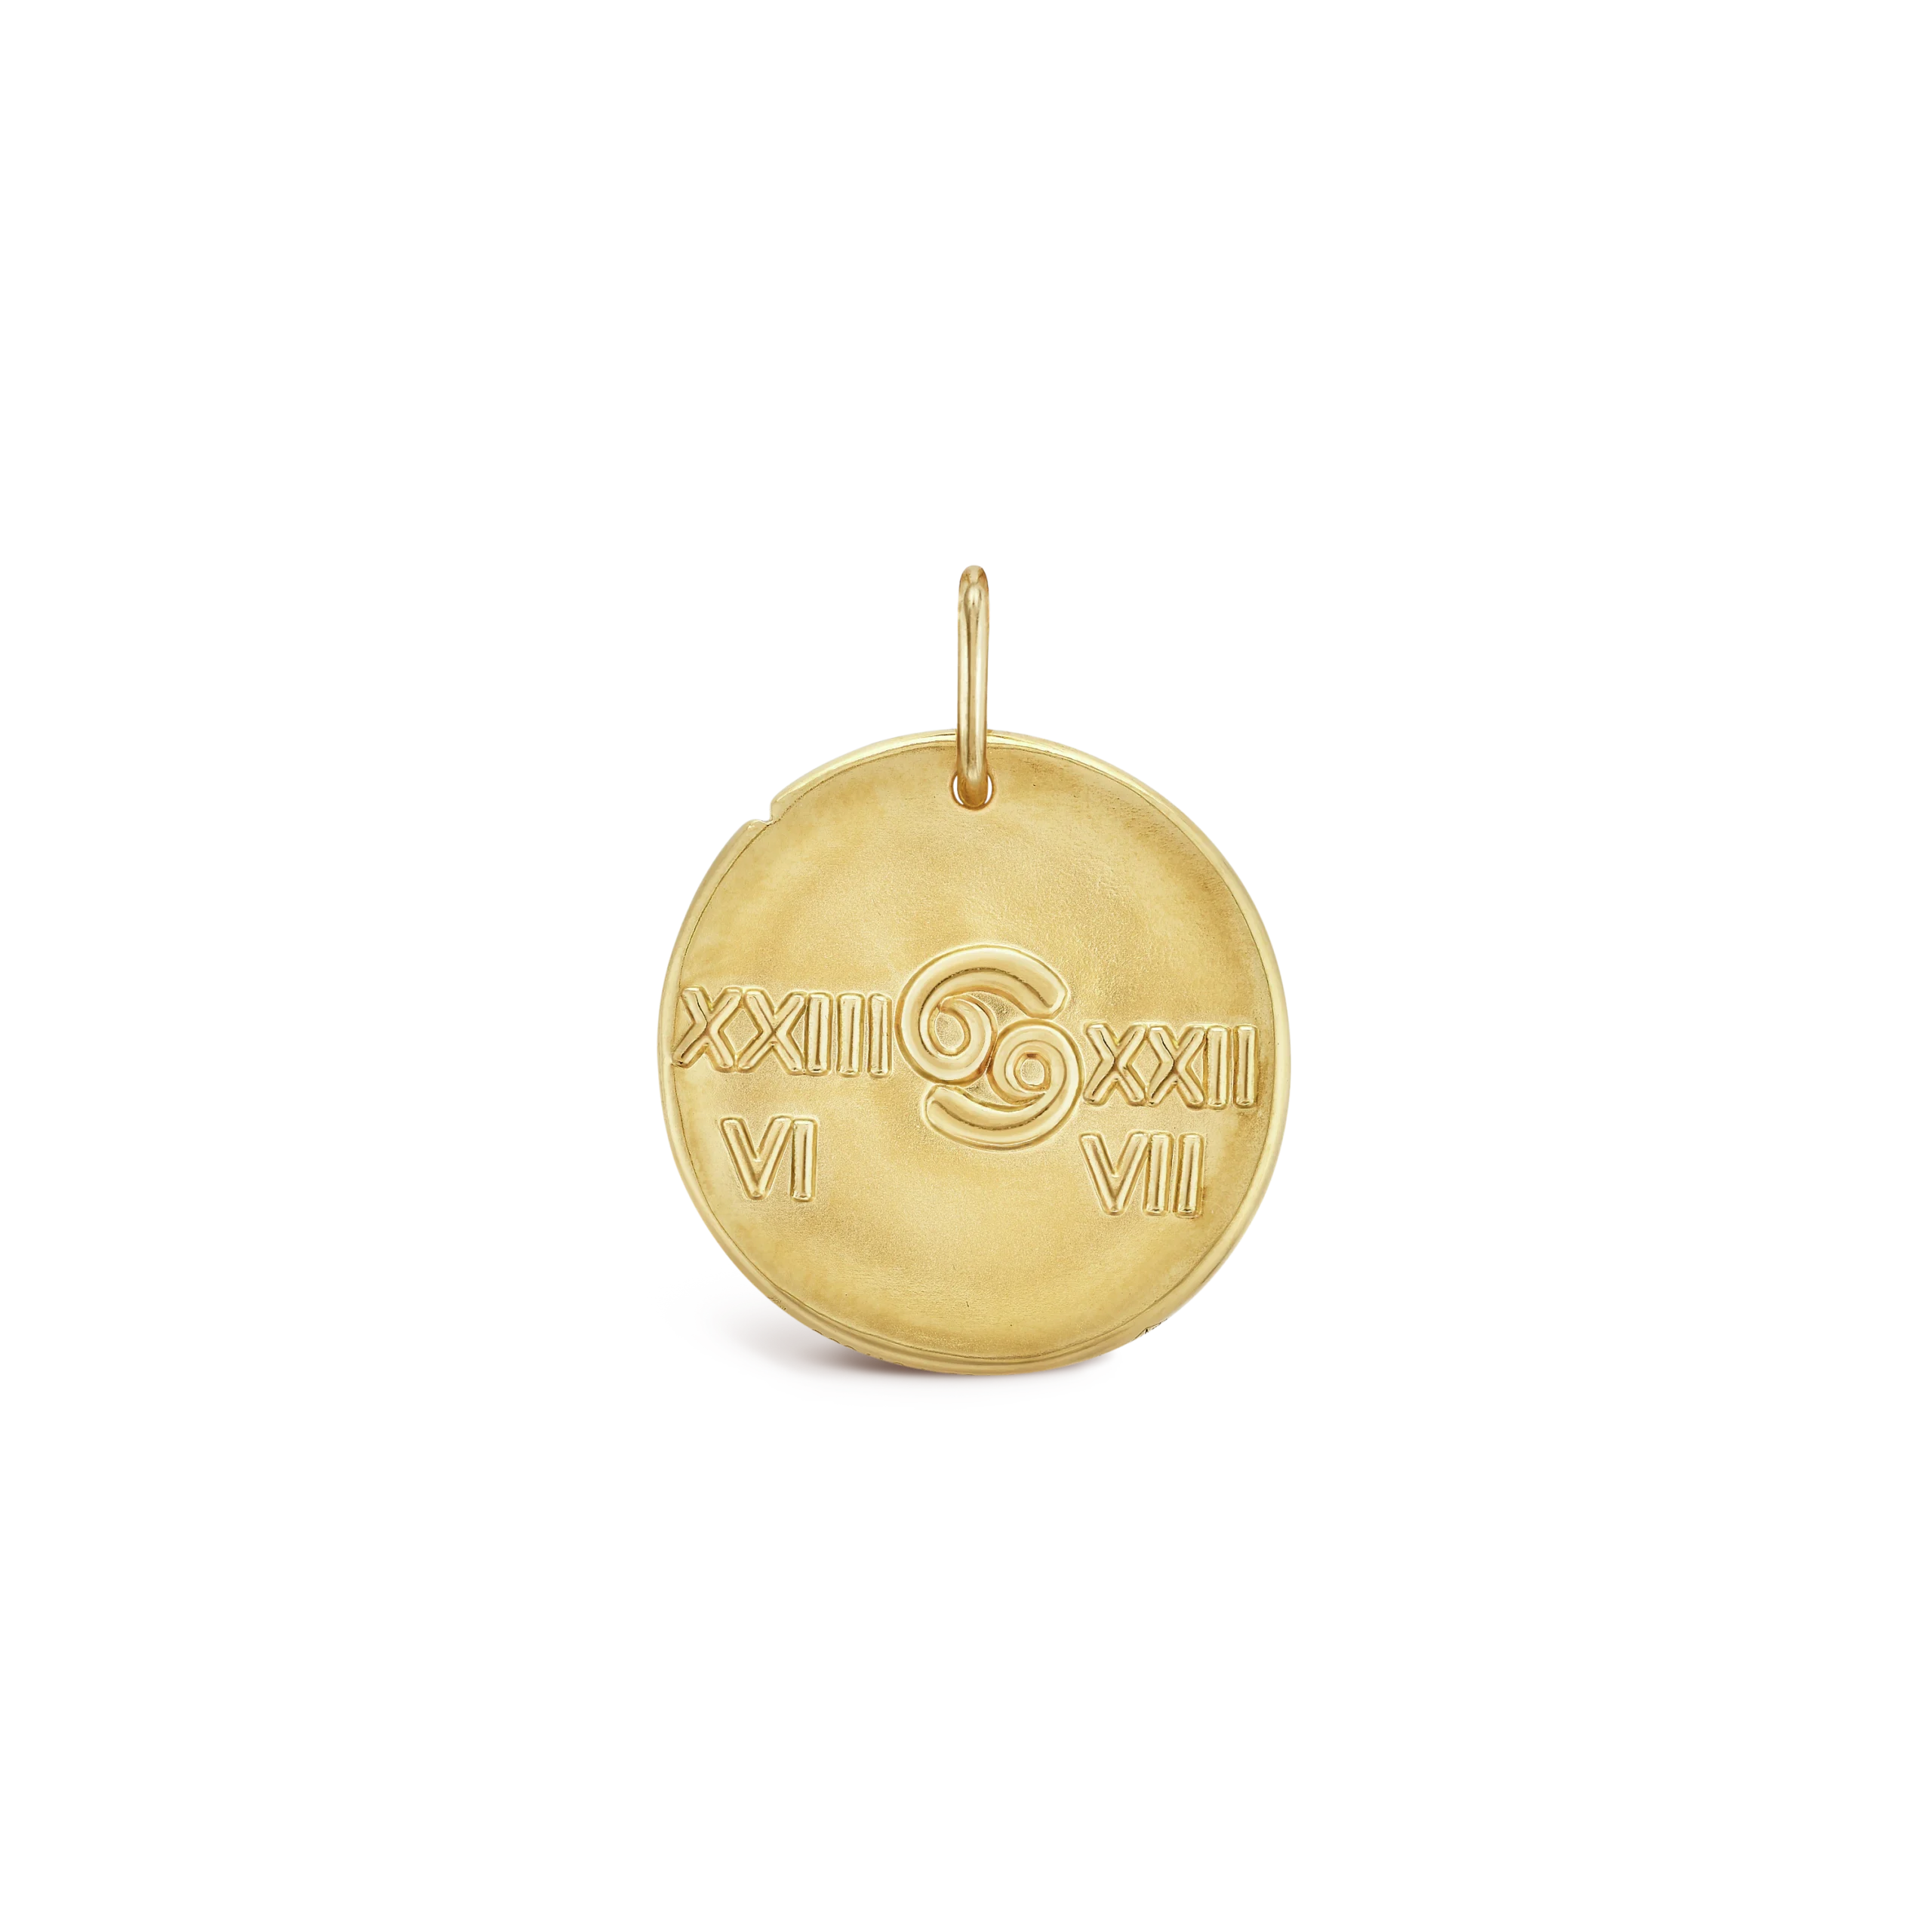 Zodiaque-medal-Cancri-Cancer-4-scaled-1.webp